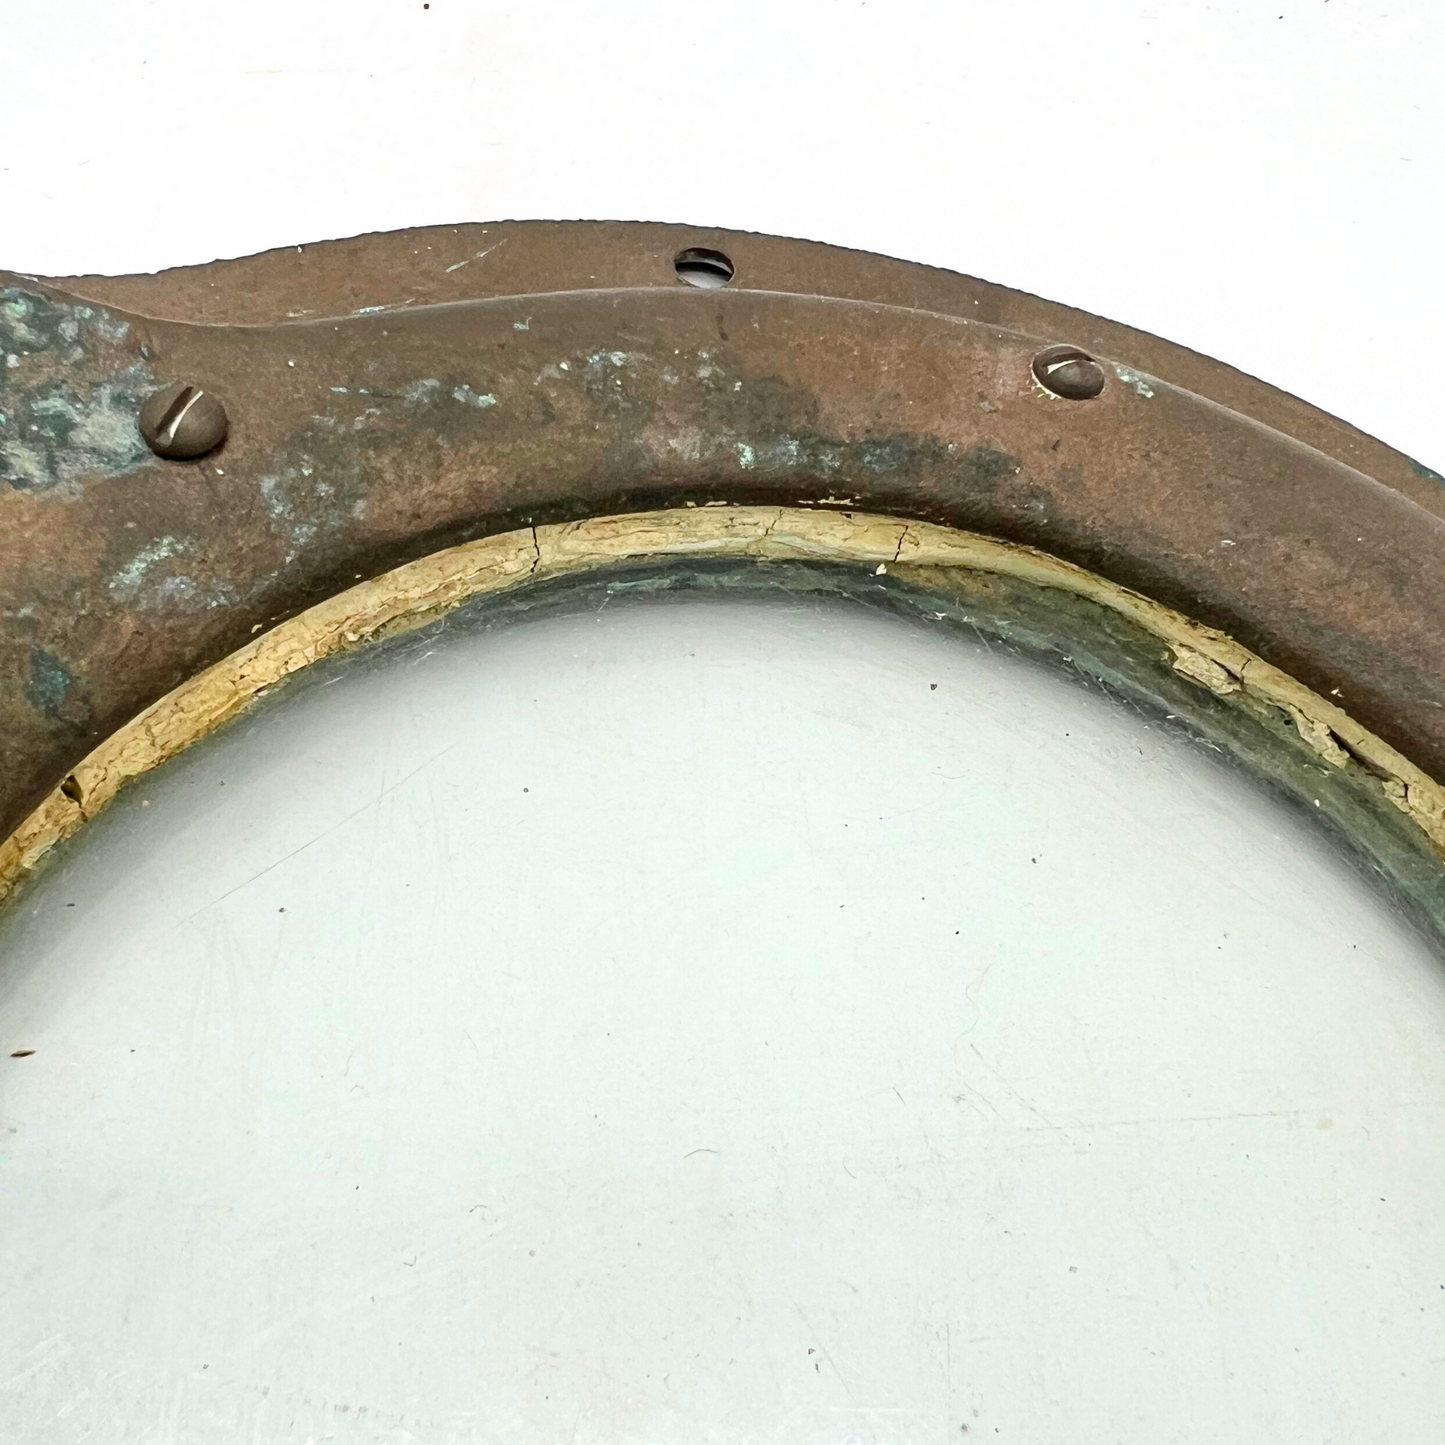 authentic salvaged porthole